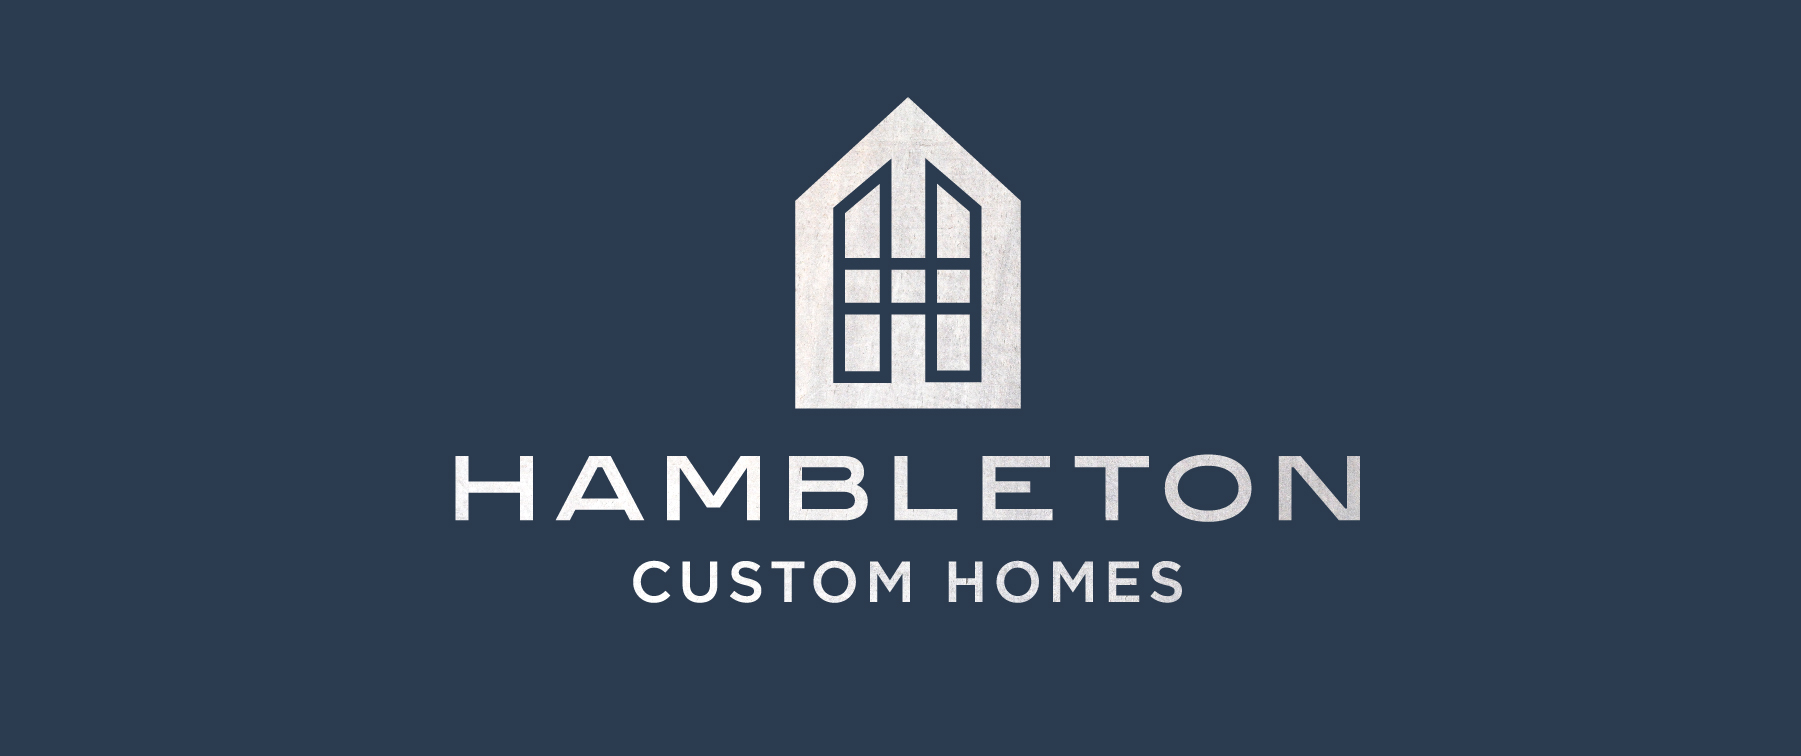 Hambleton Homes - Branding